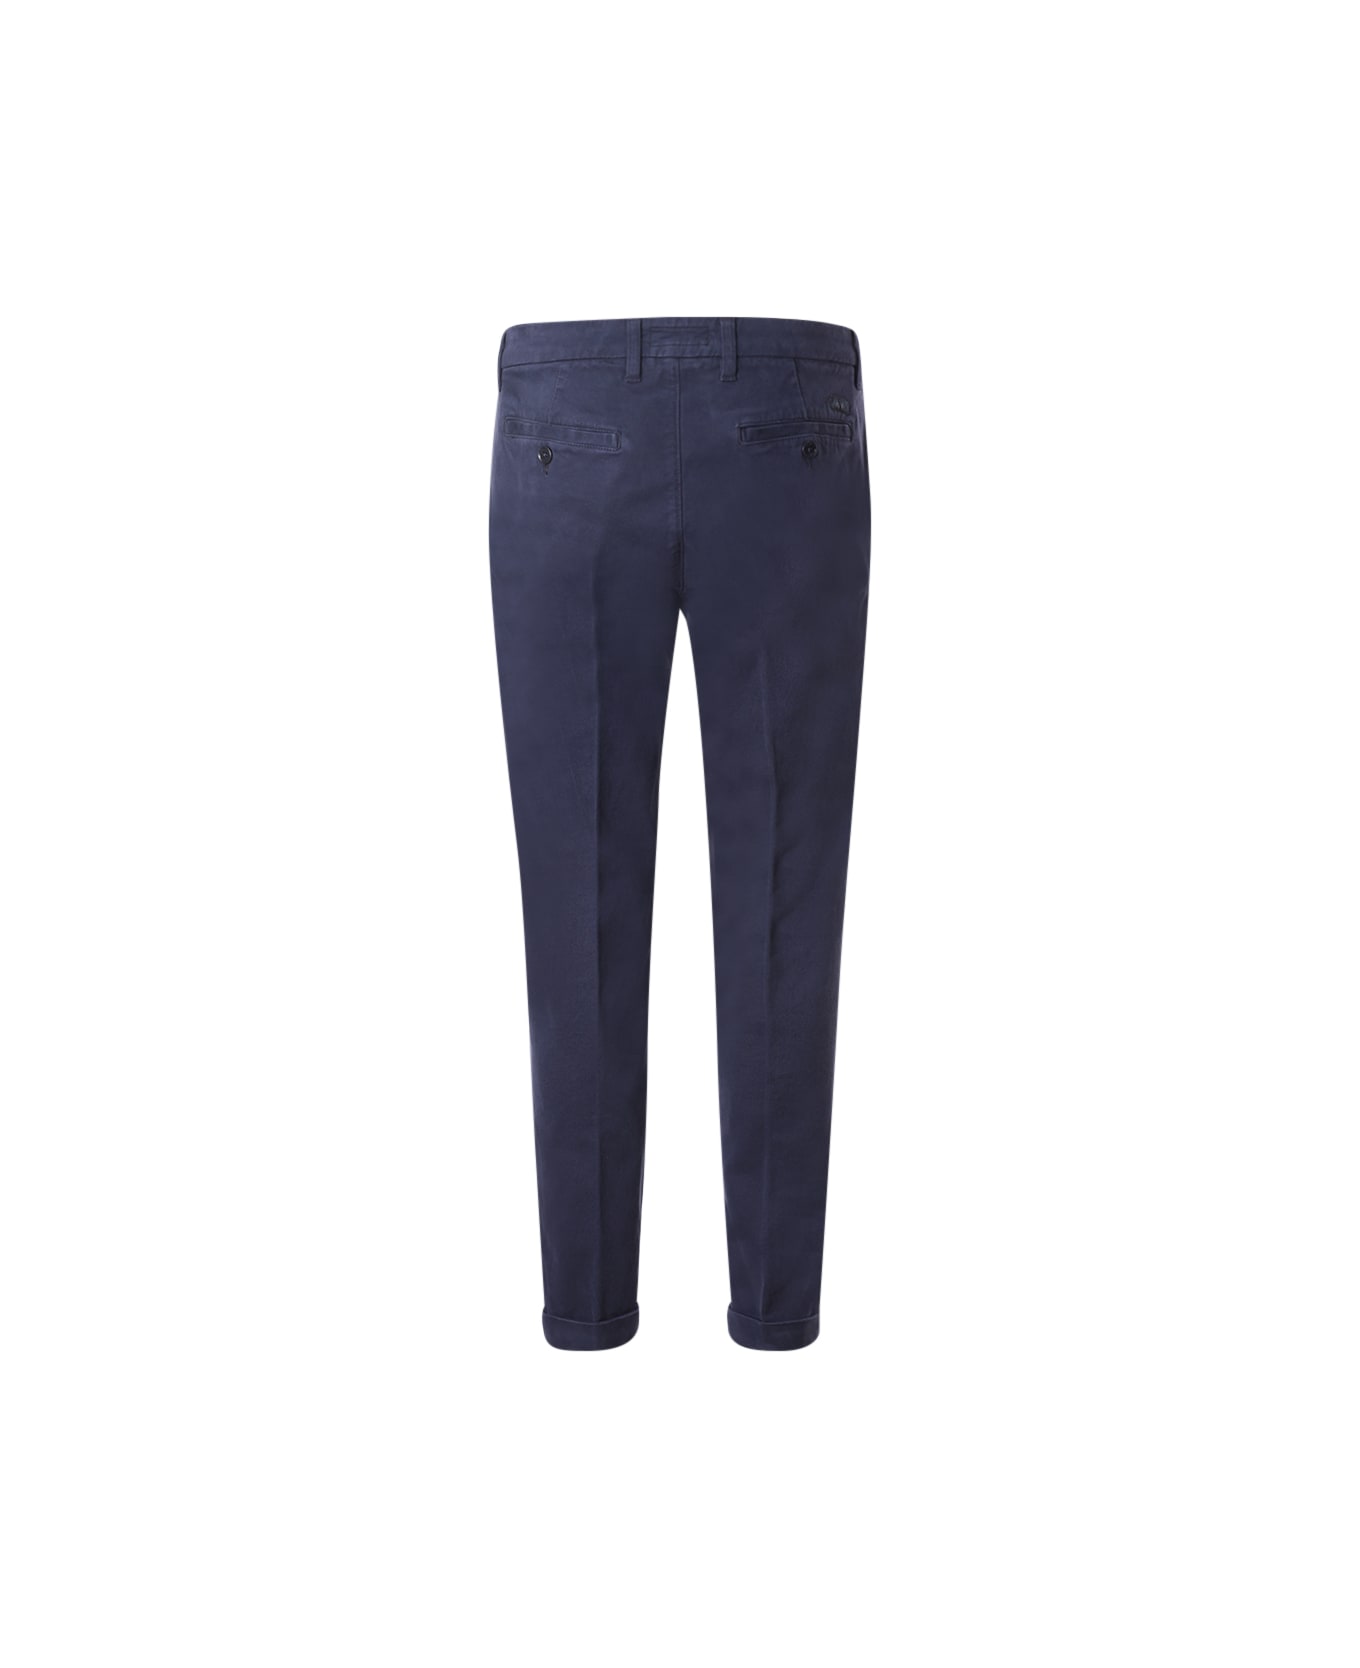 Fay Navy Blue Capri Cotton Trousers Pants - Blue